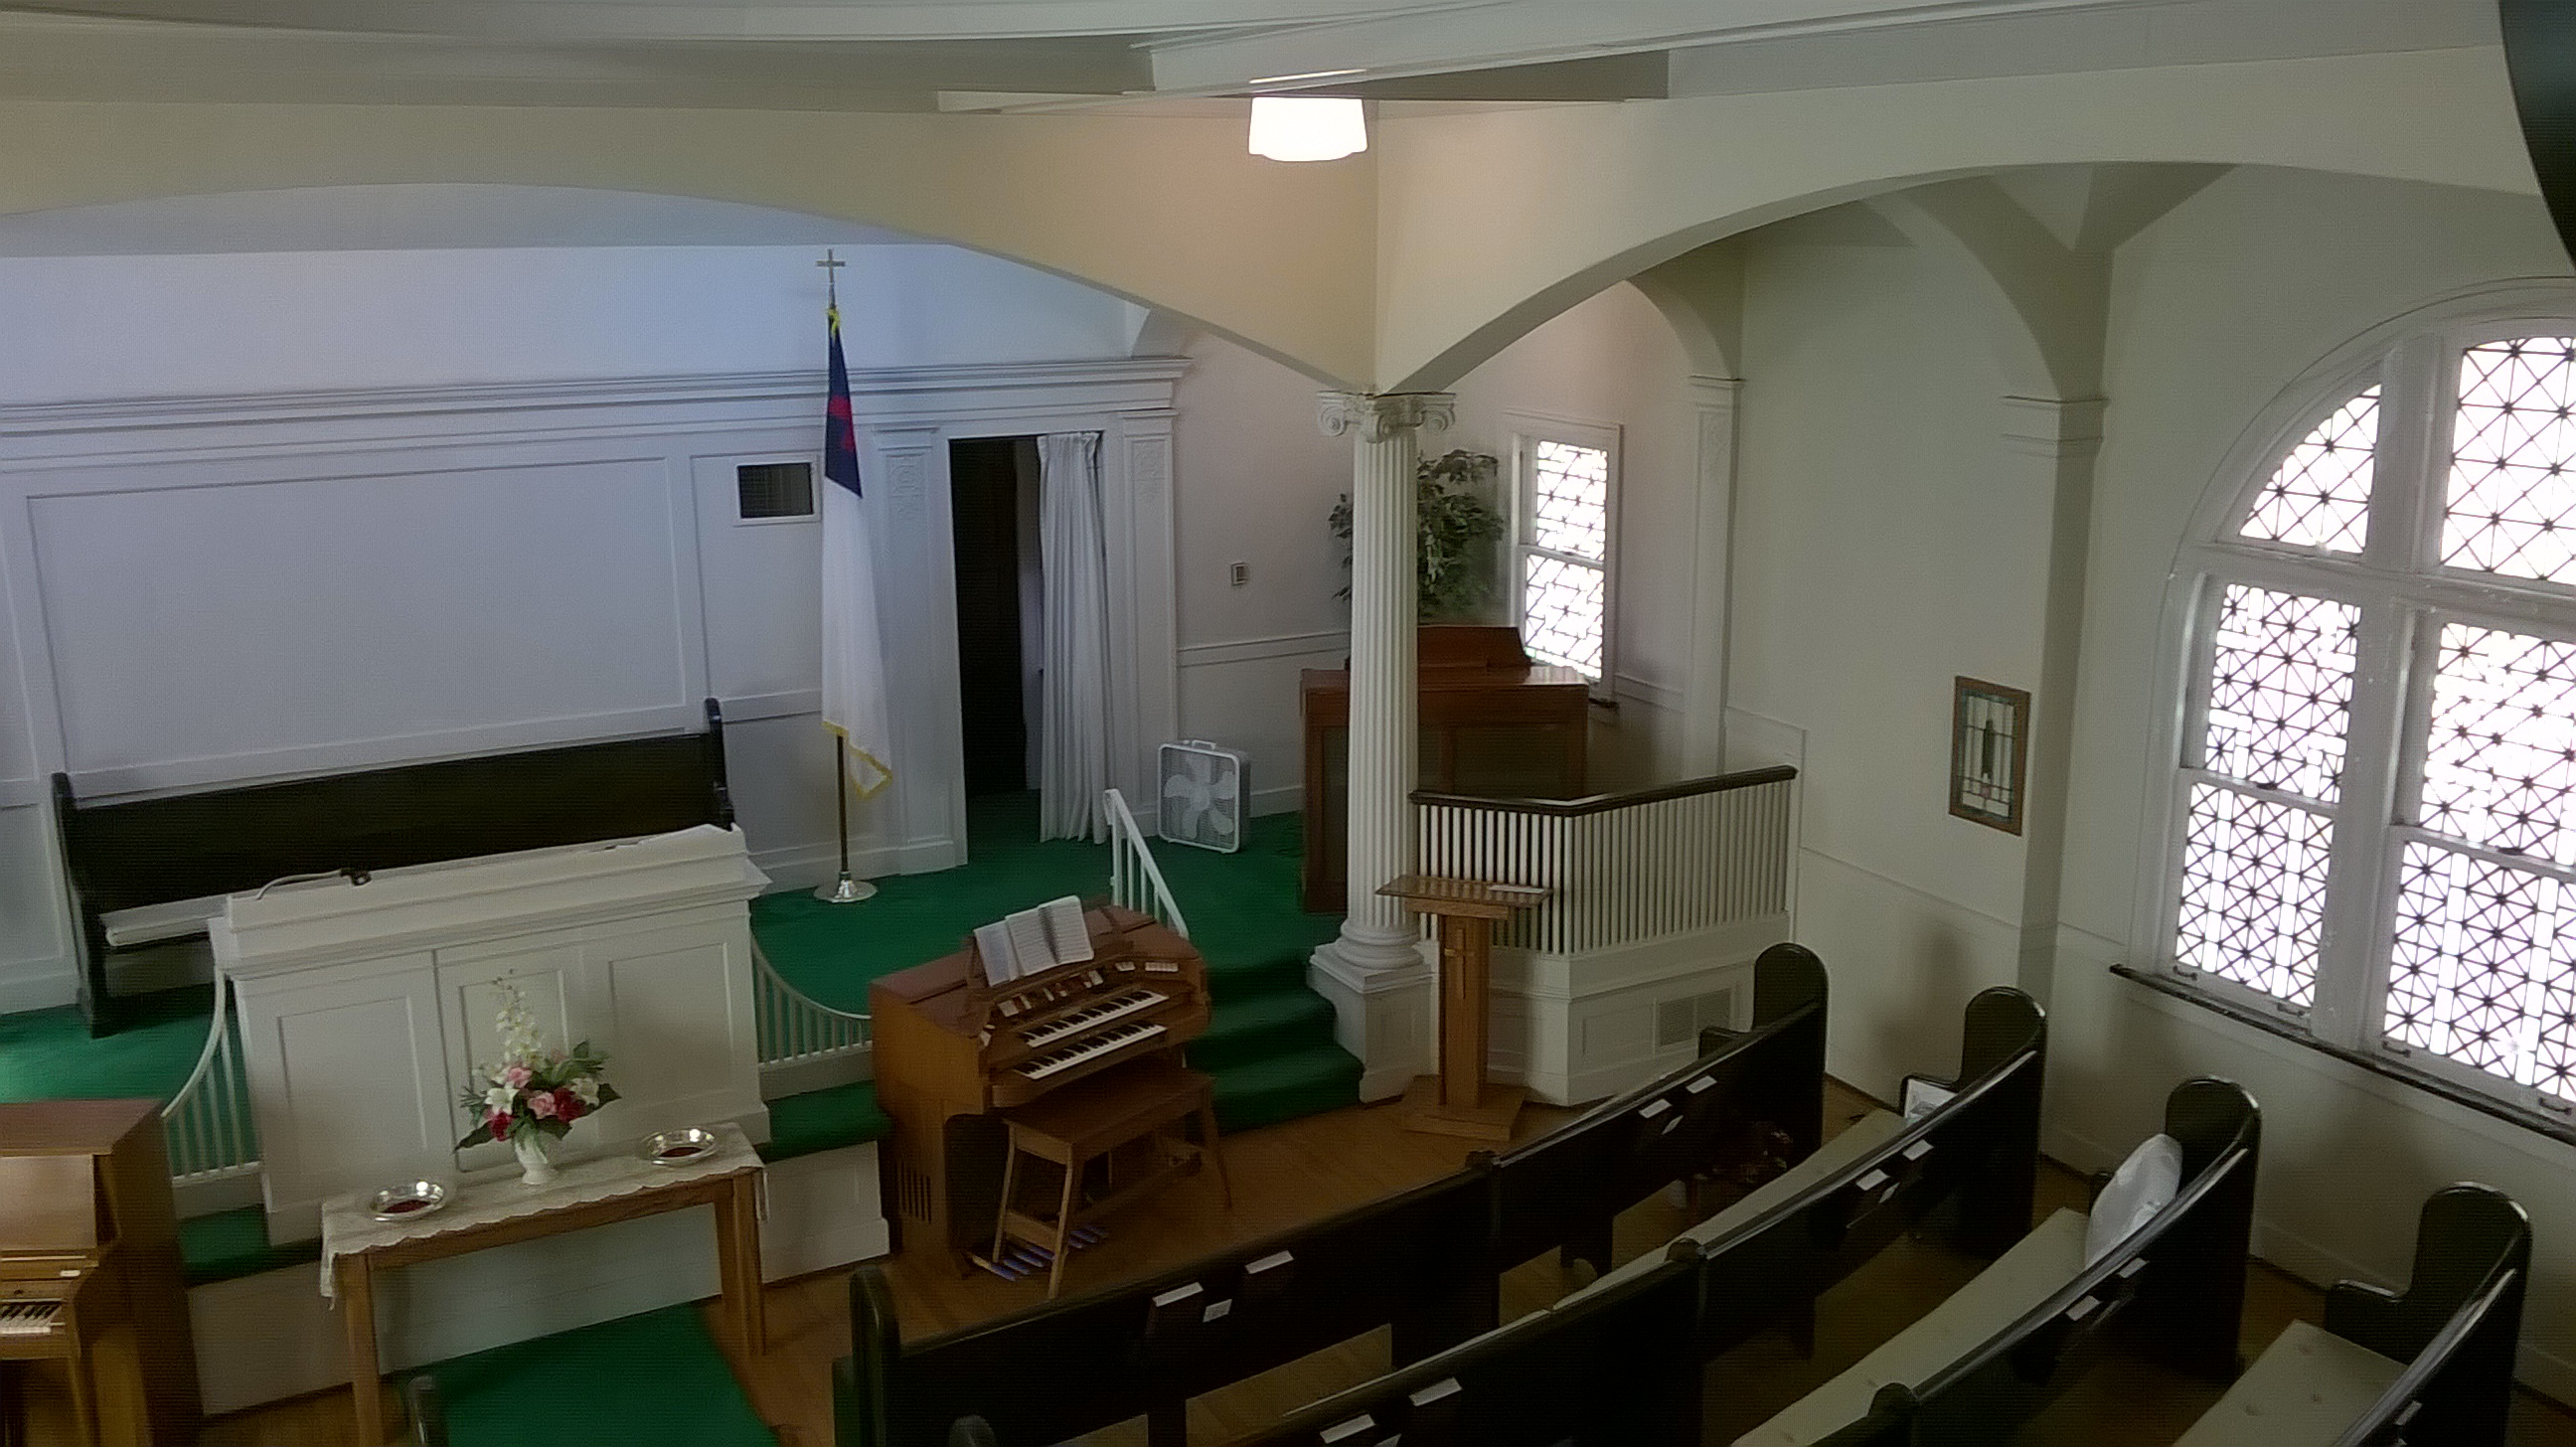 Church Venue, Church, Indoors, Pulpit, Seating, HQ Photo